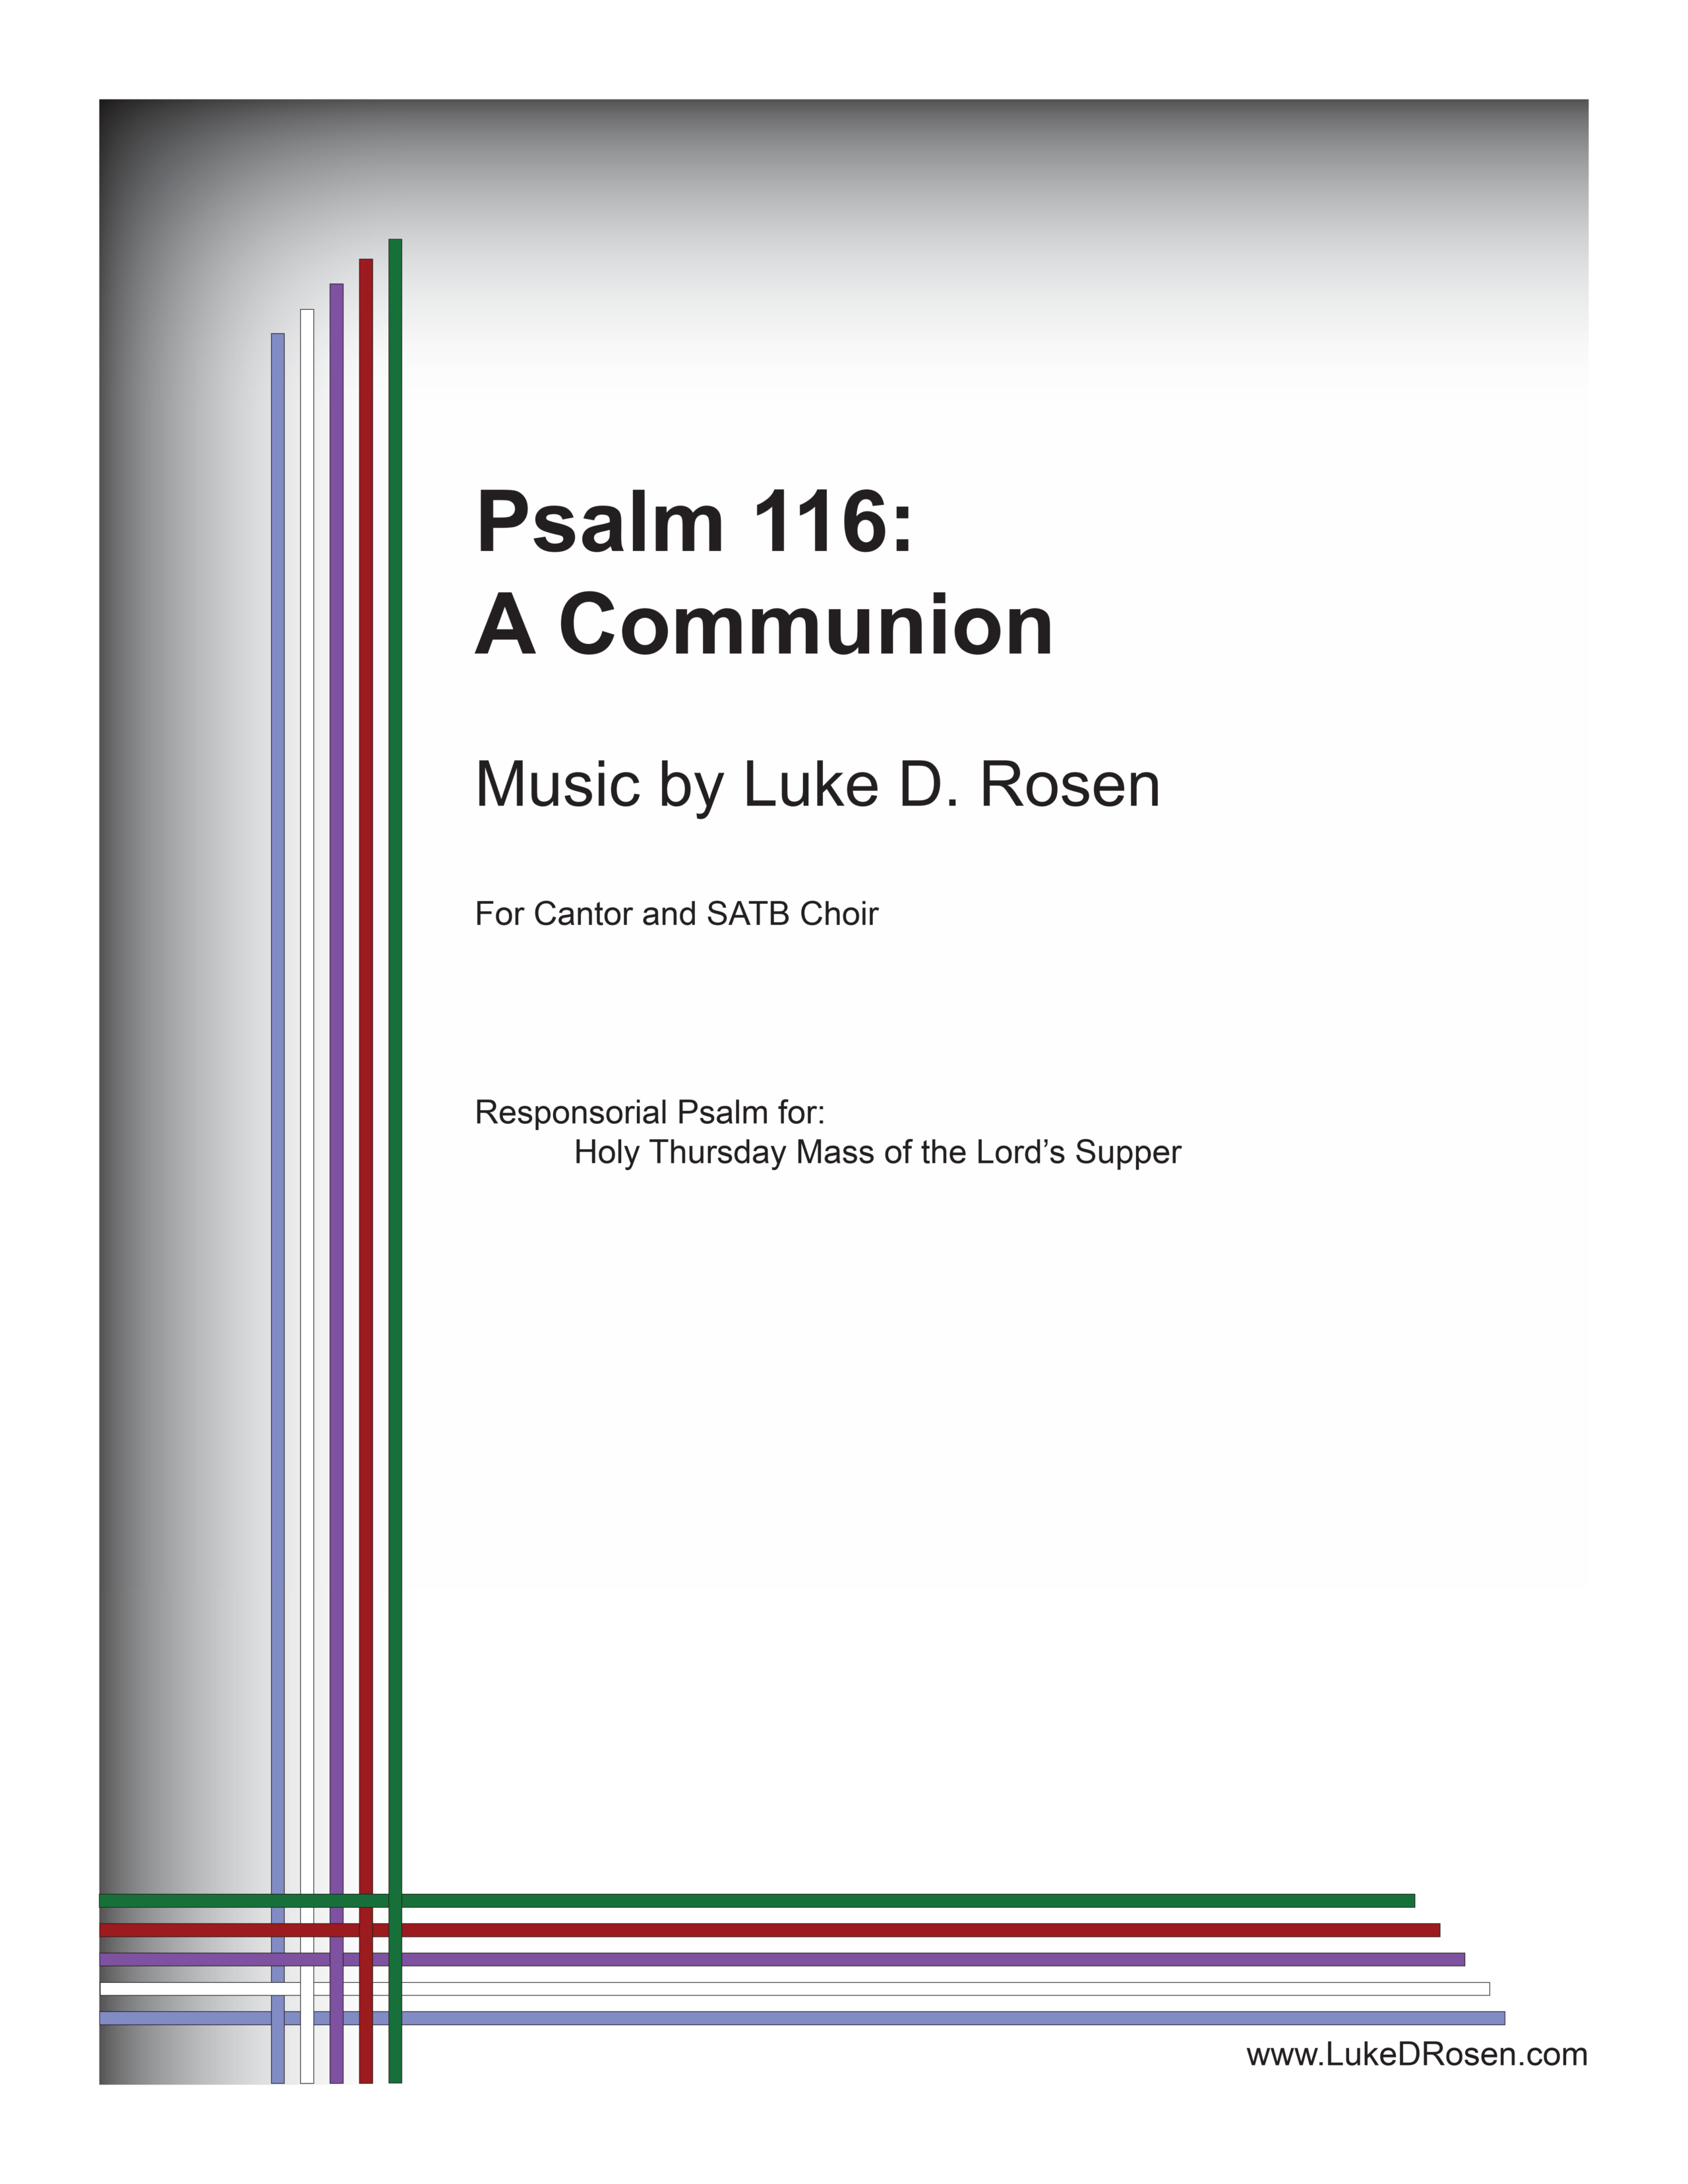 Psalm 116 – A Communion (Rosen)